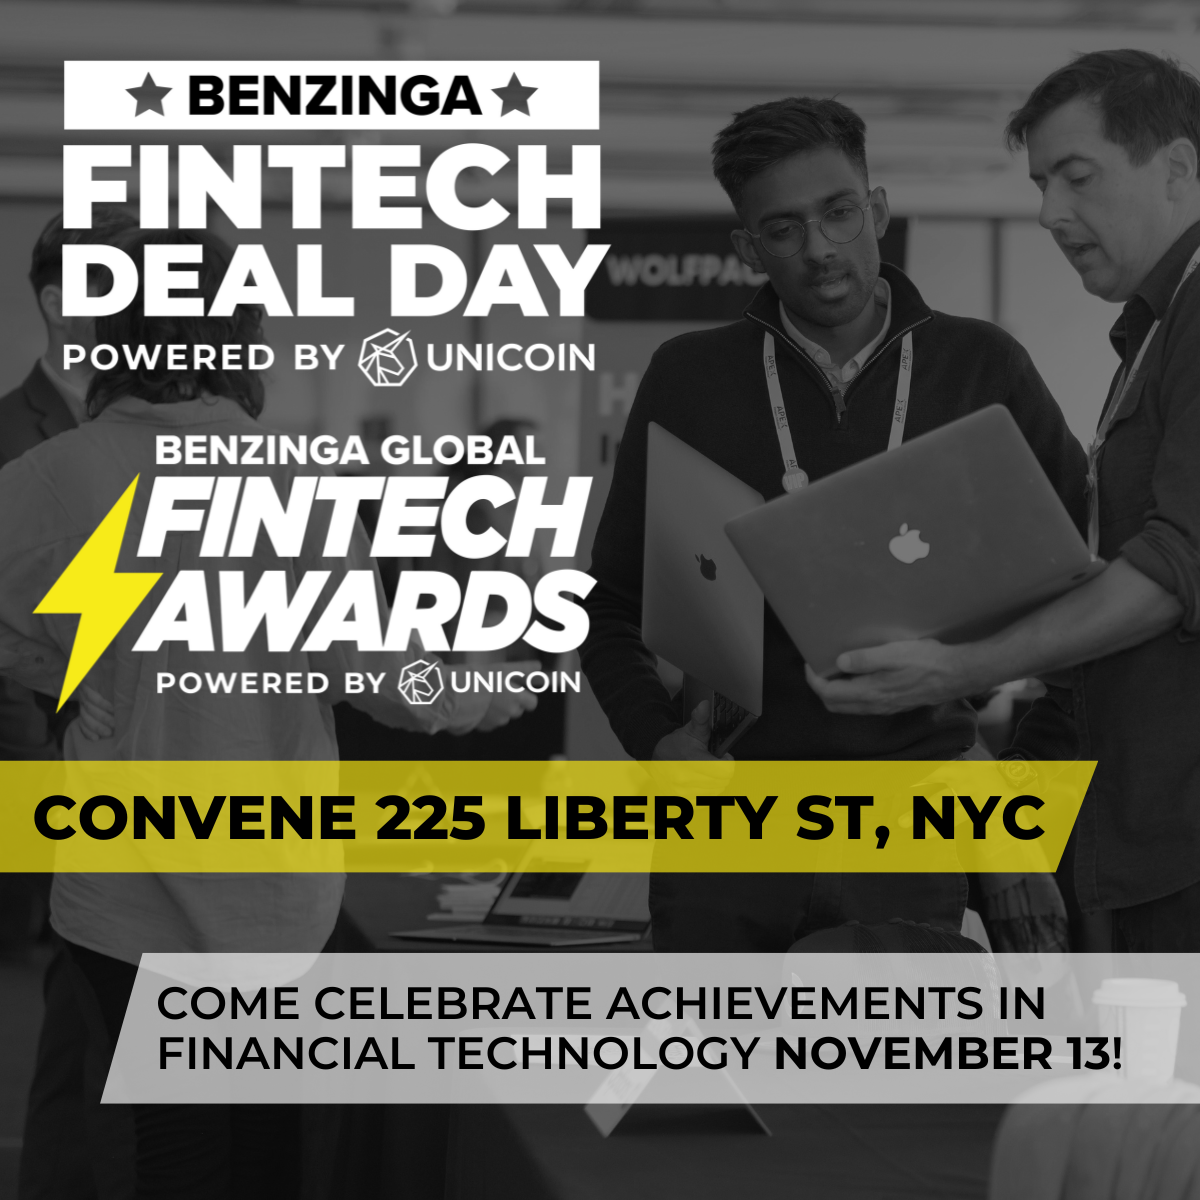 Benzinga Fintech Deal Day  organized by Benzinga